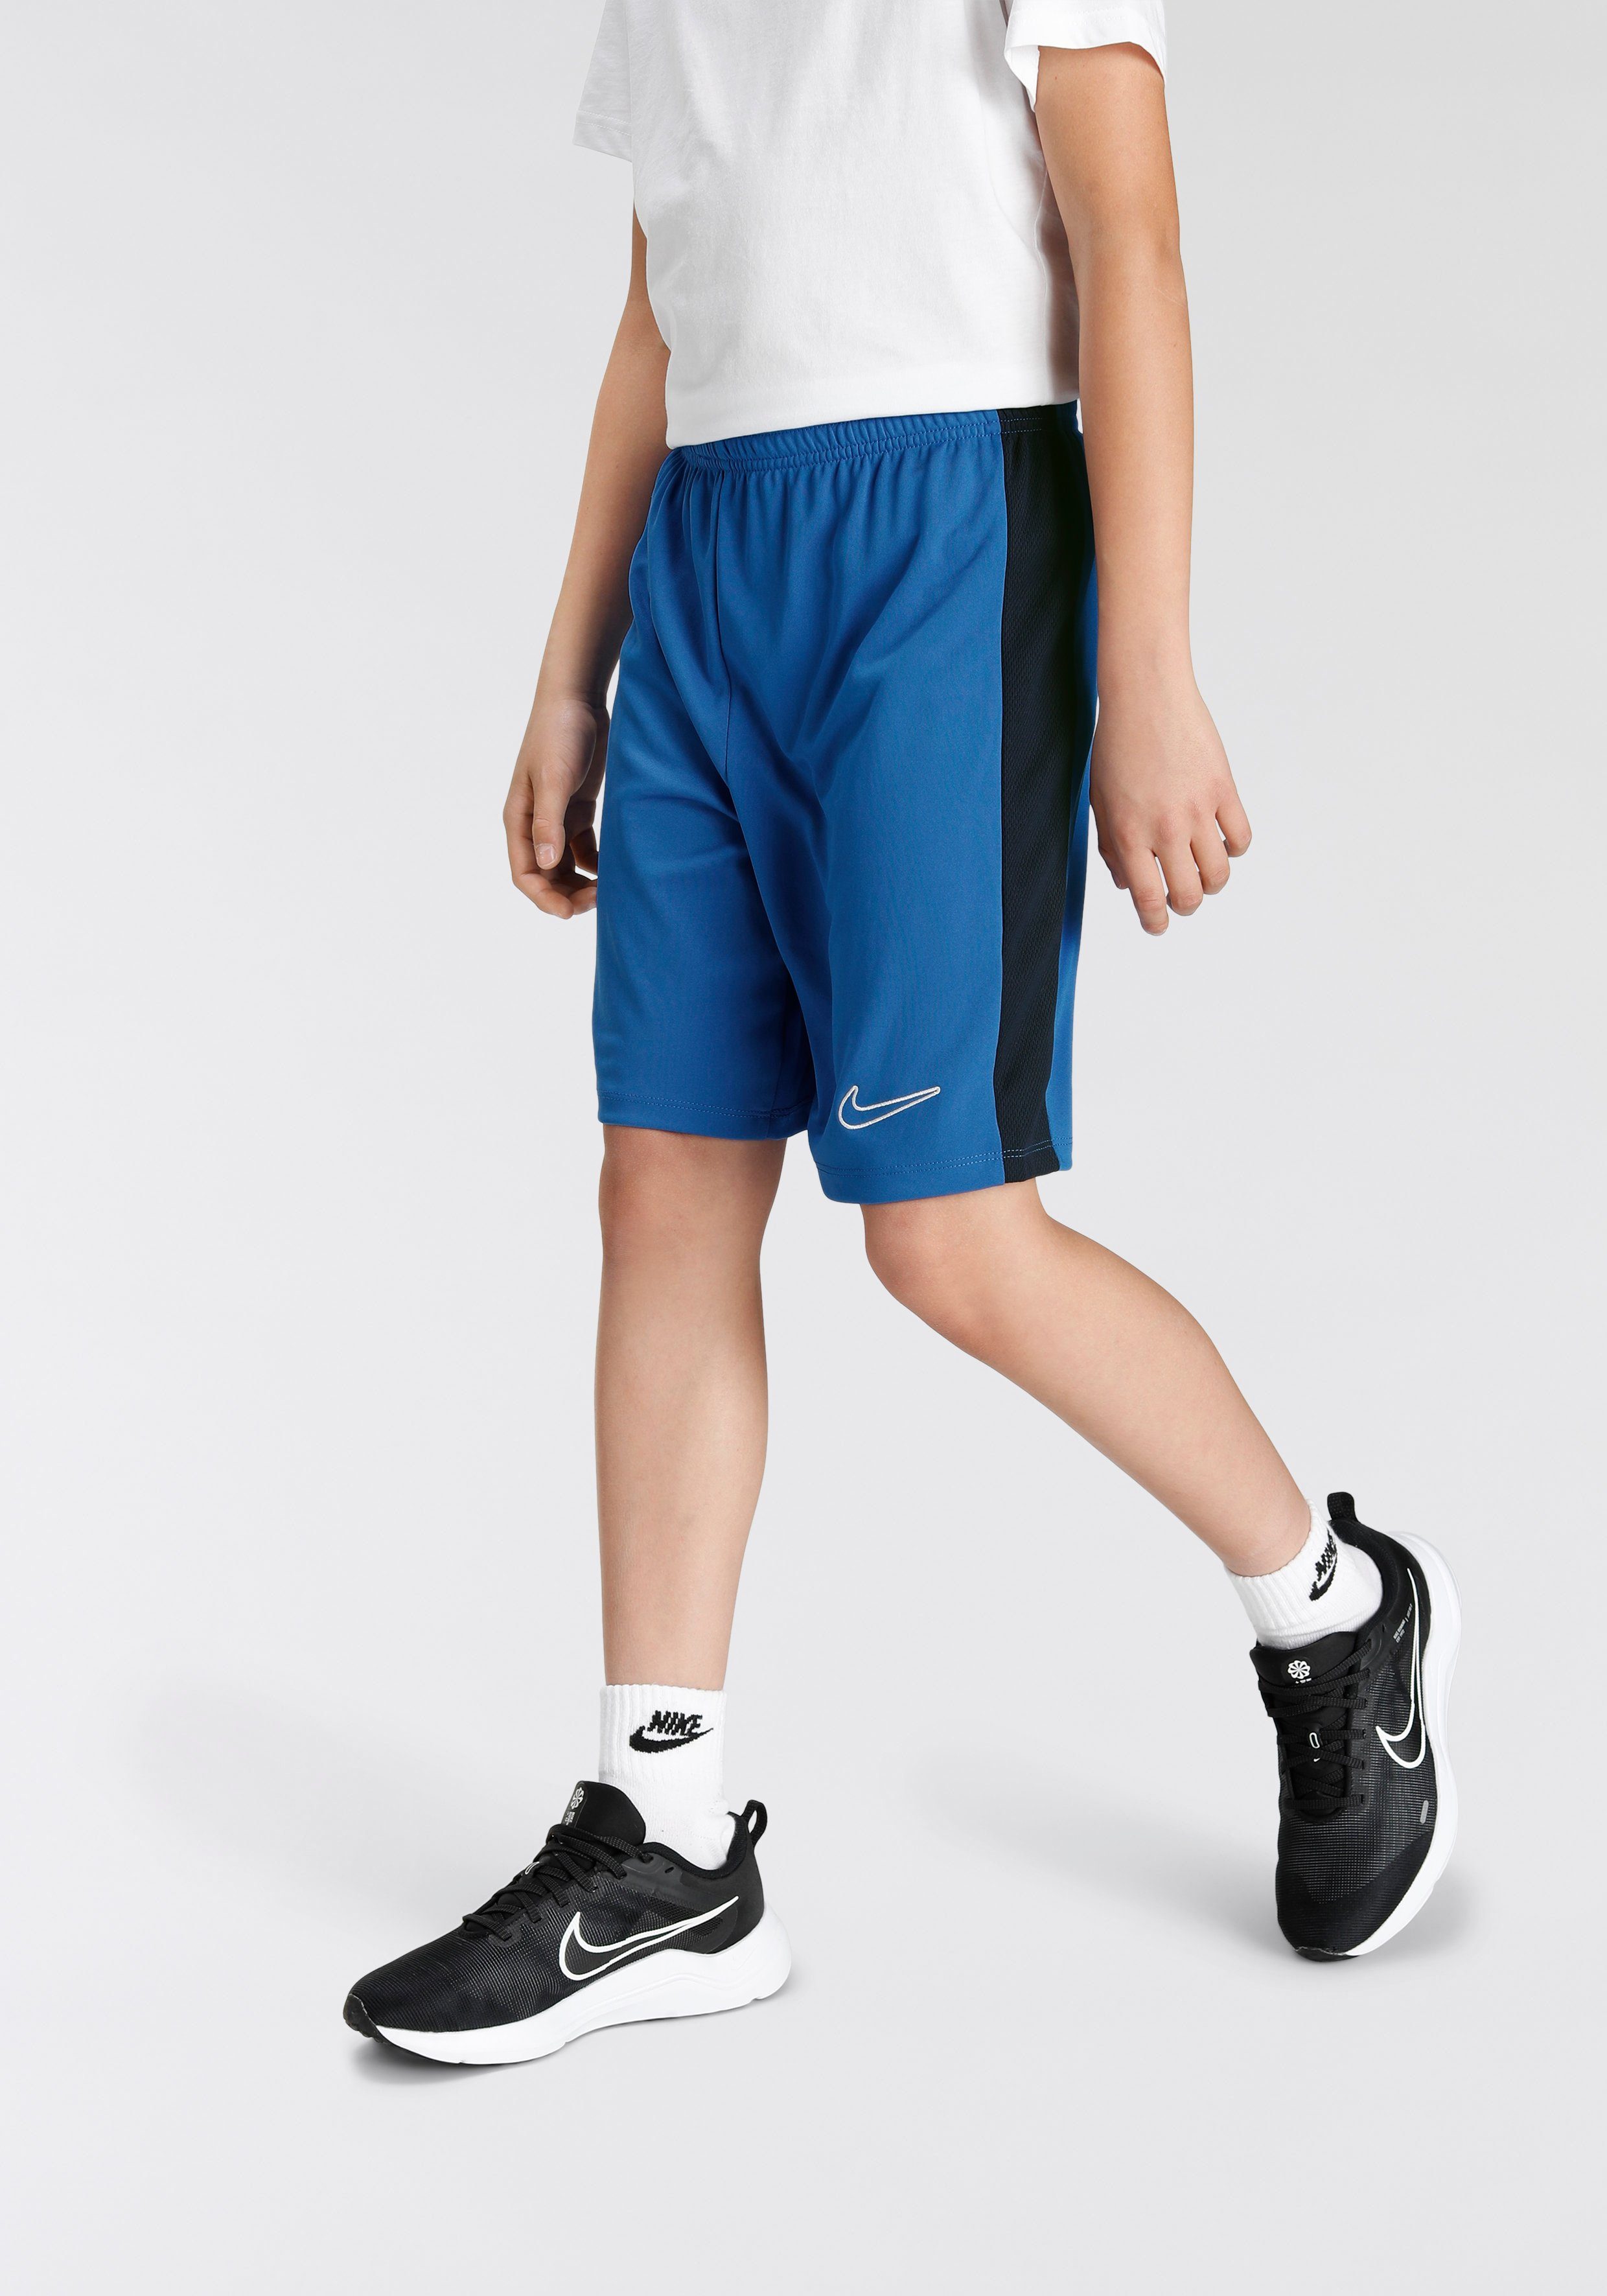 DRI-FIT BLUE/OBSIDIAN/WHITE SHORTS ACADEMY ROYAL KIDS' Trainingsshorts Nike